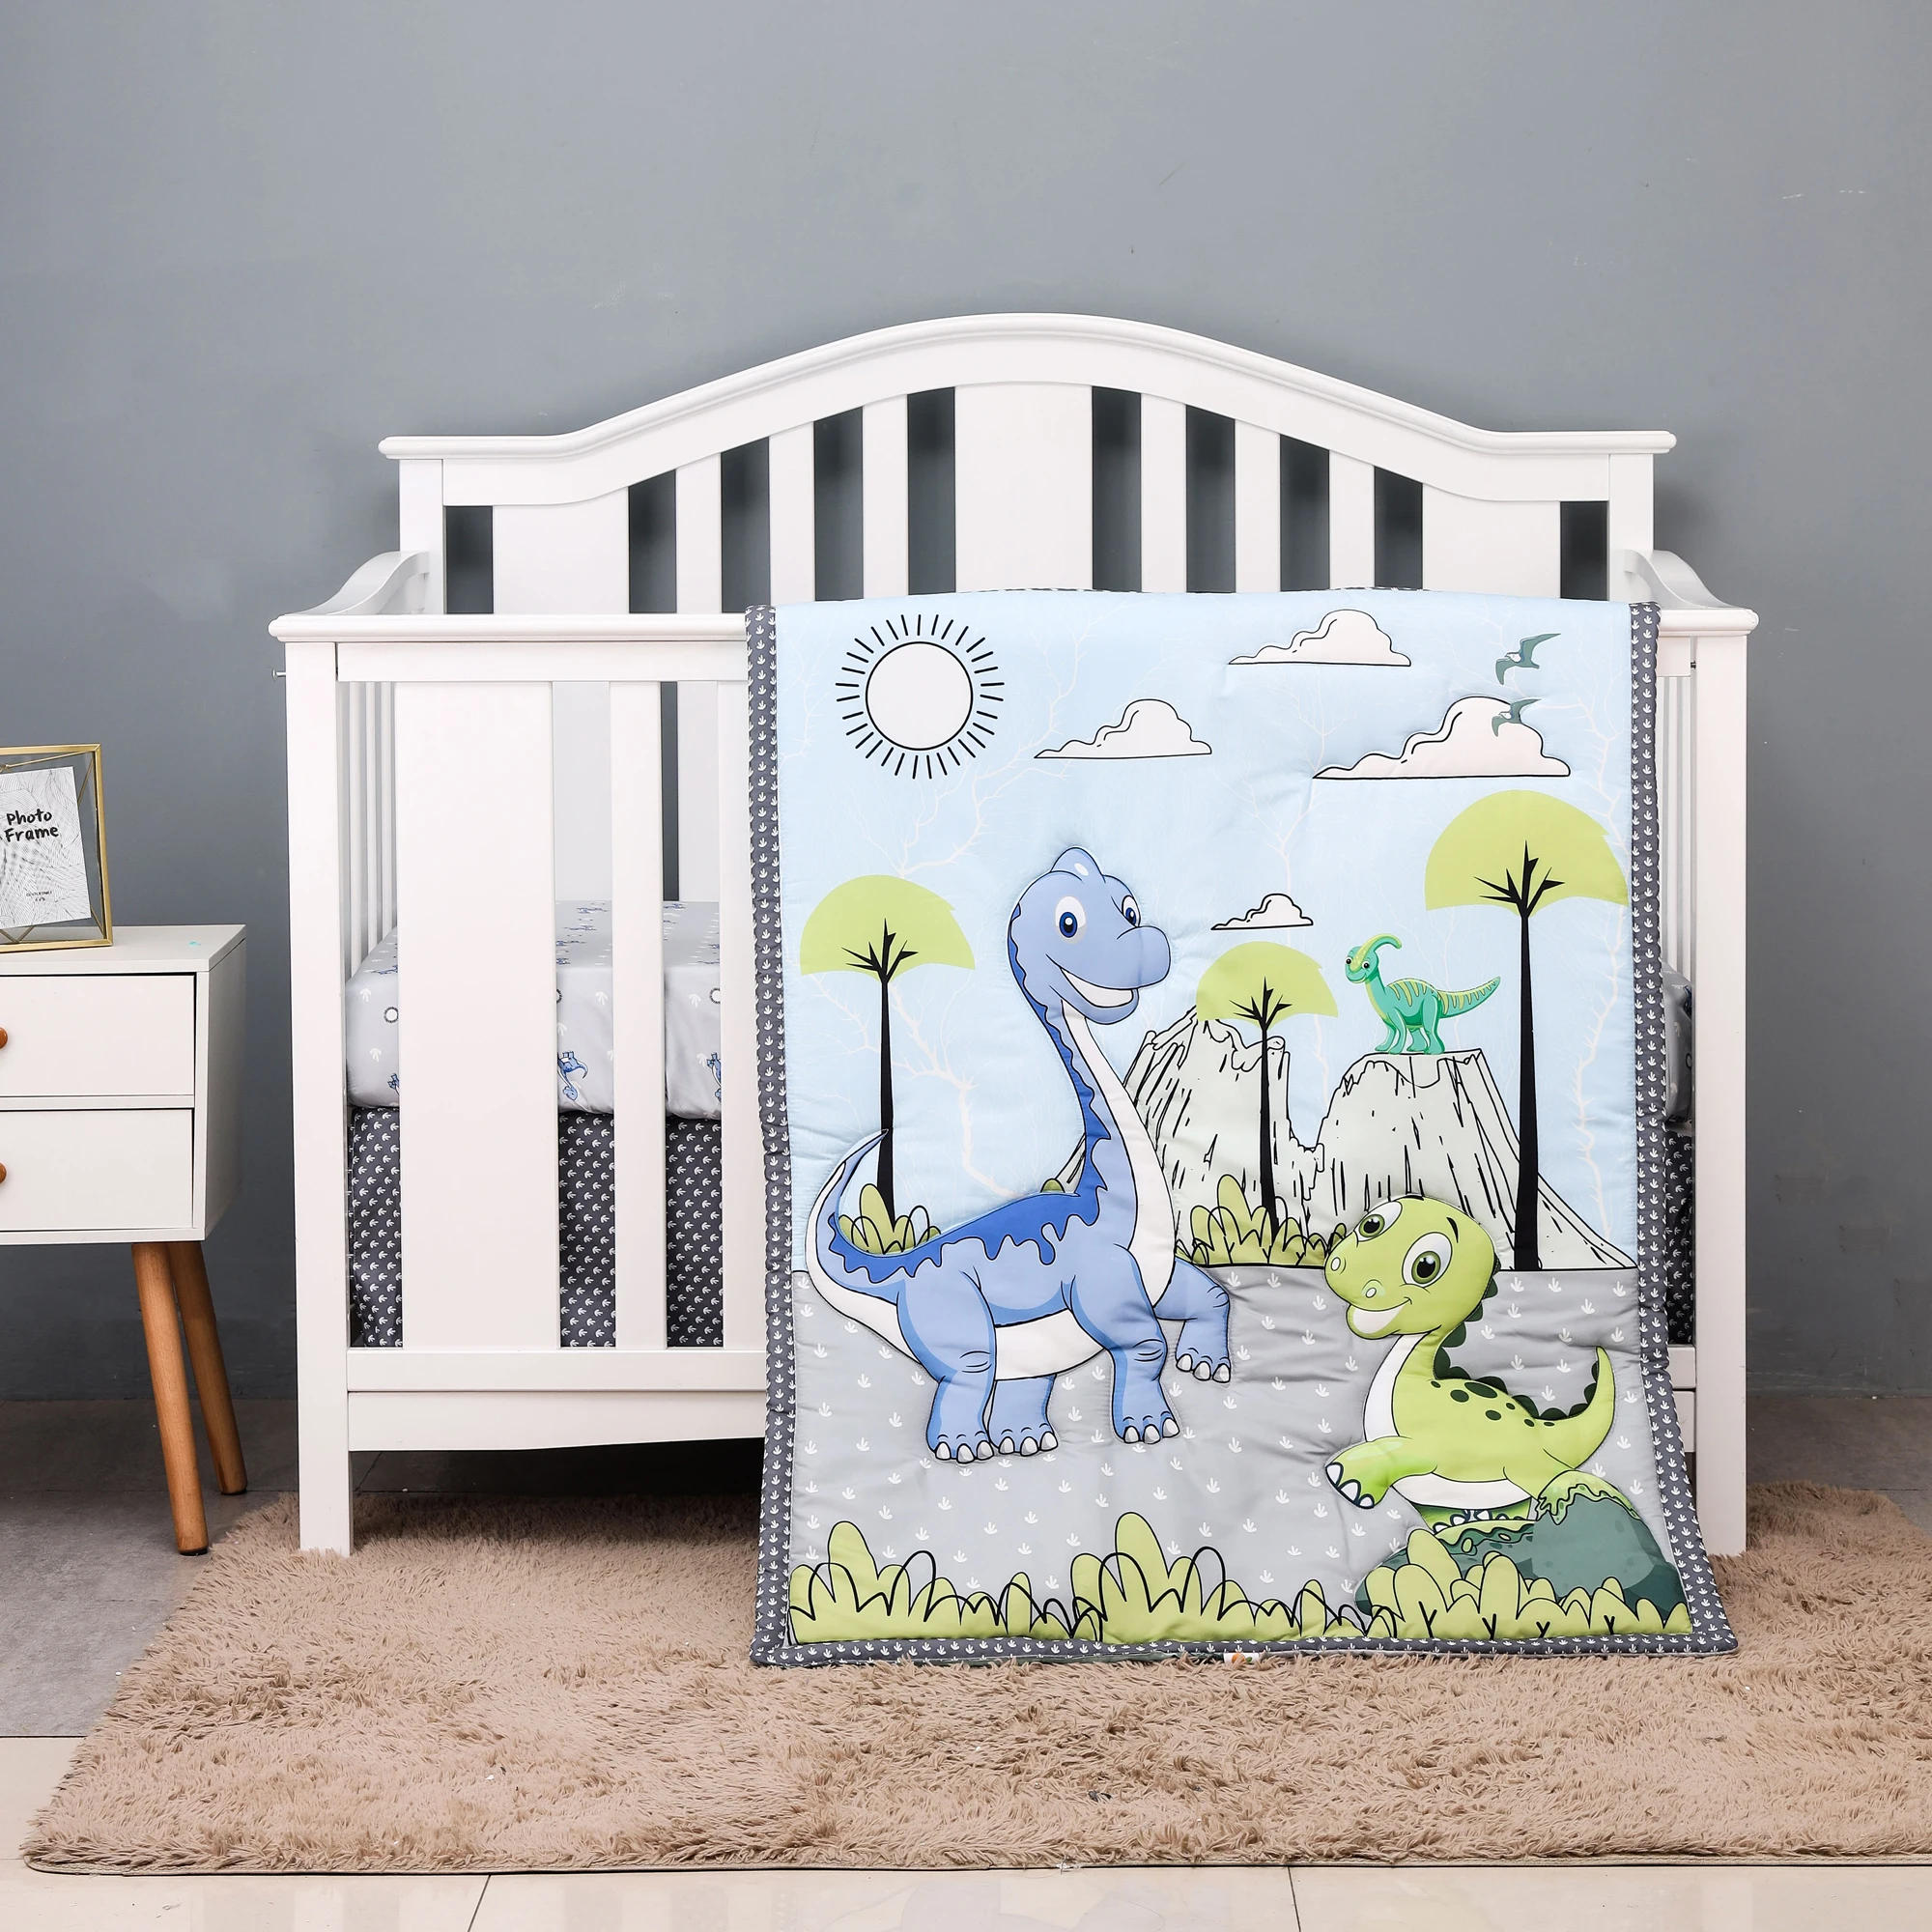 4 pcs cheep dinosaur design new design baby bedding set for boys new born-comforter, crib sheet, crib skirt and pillow case